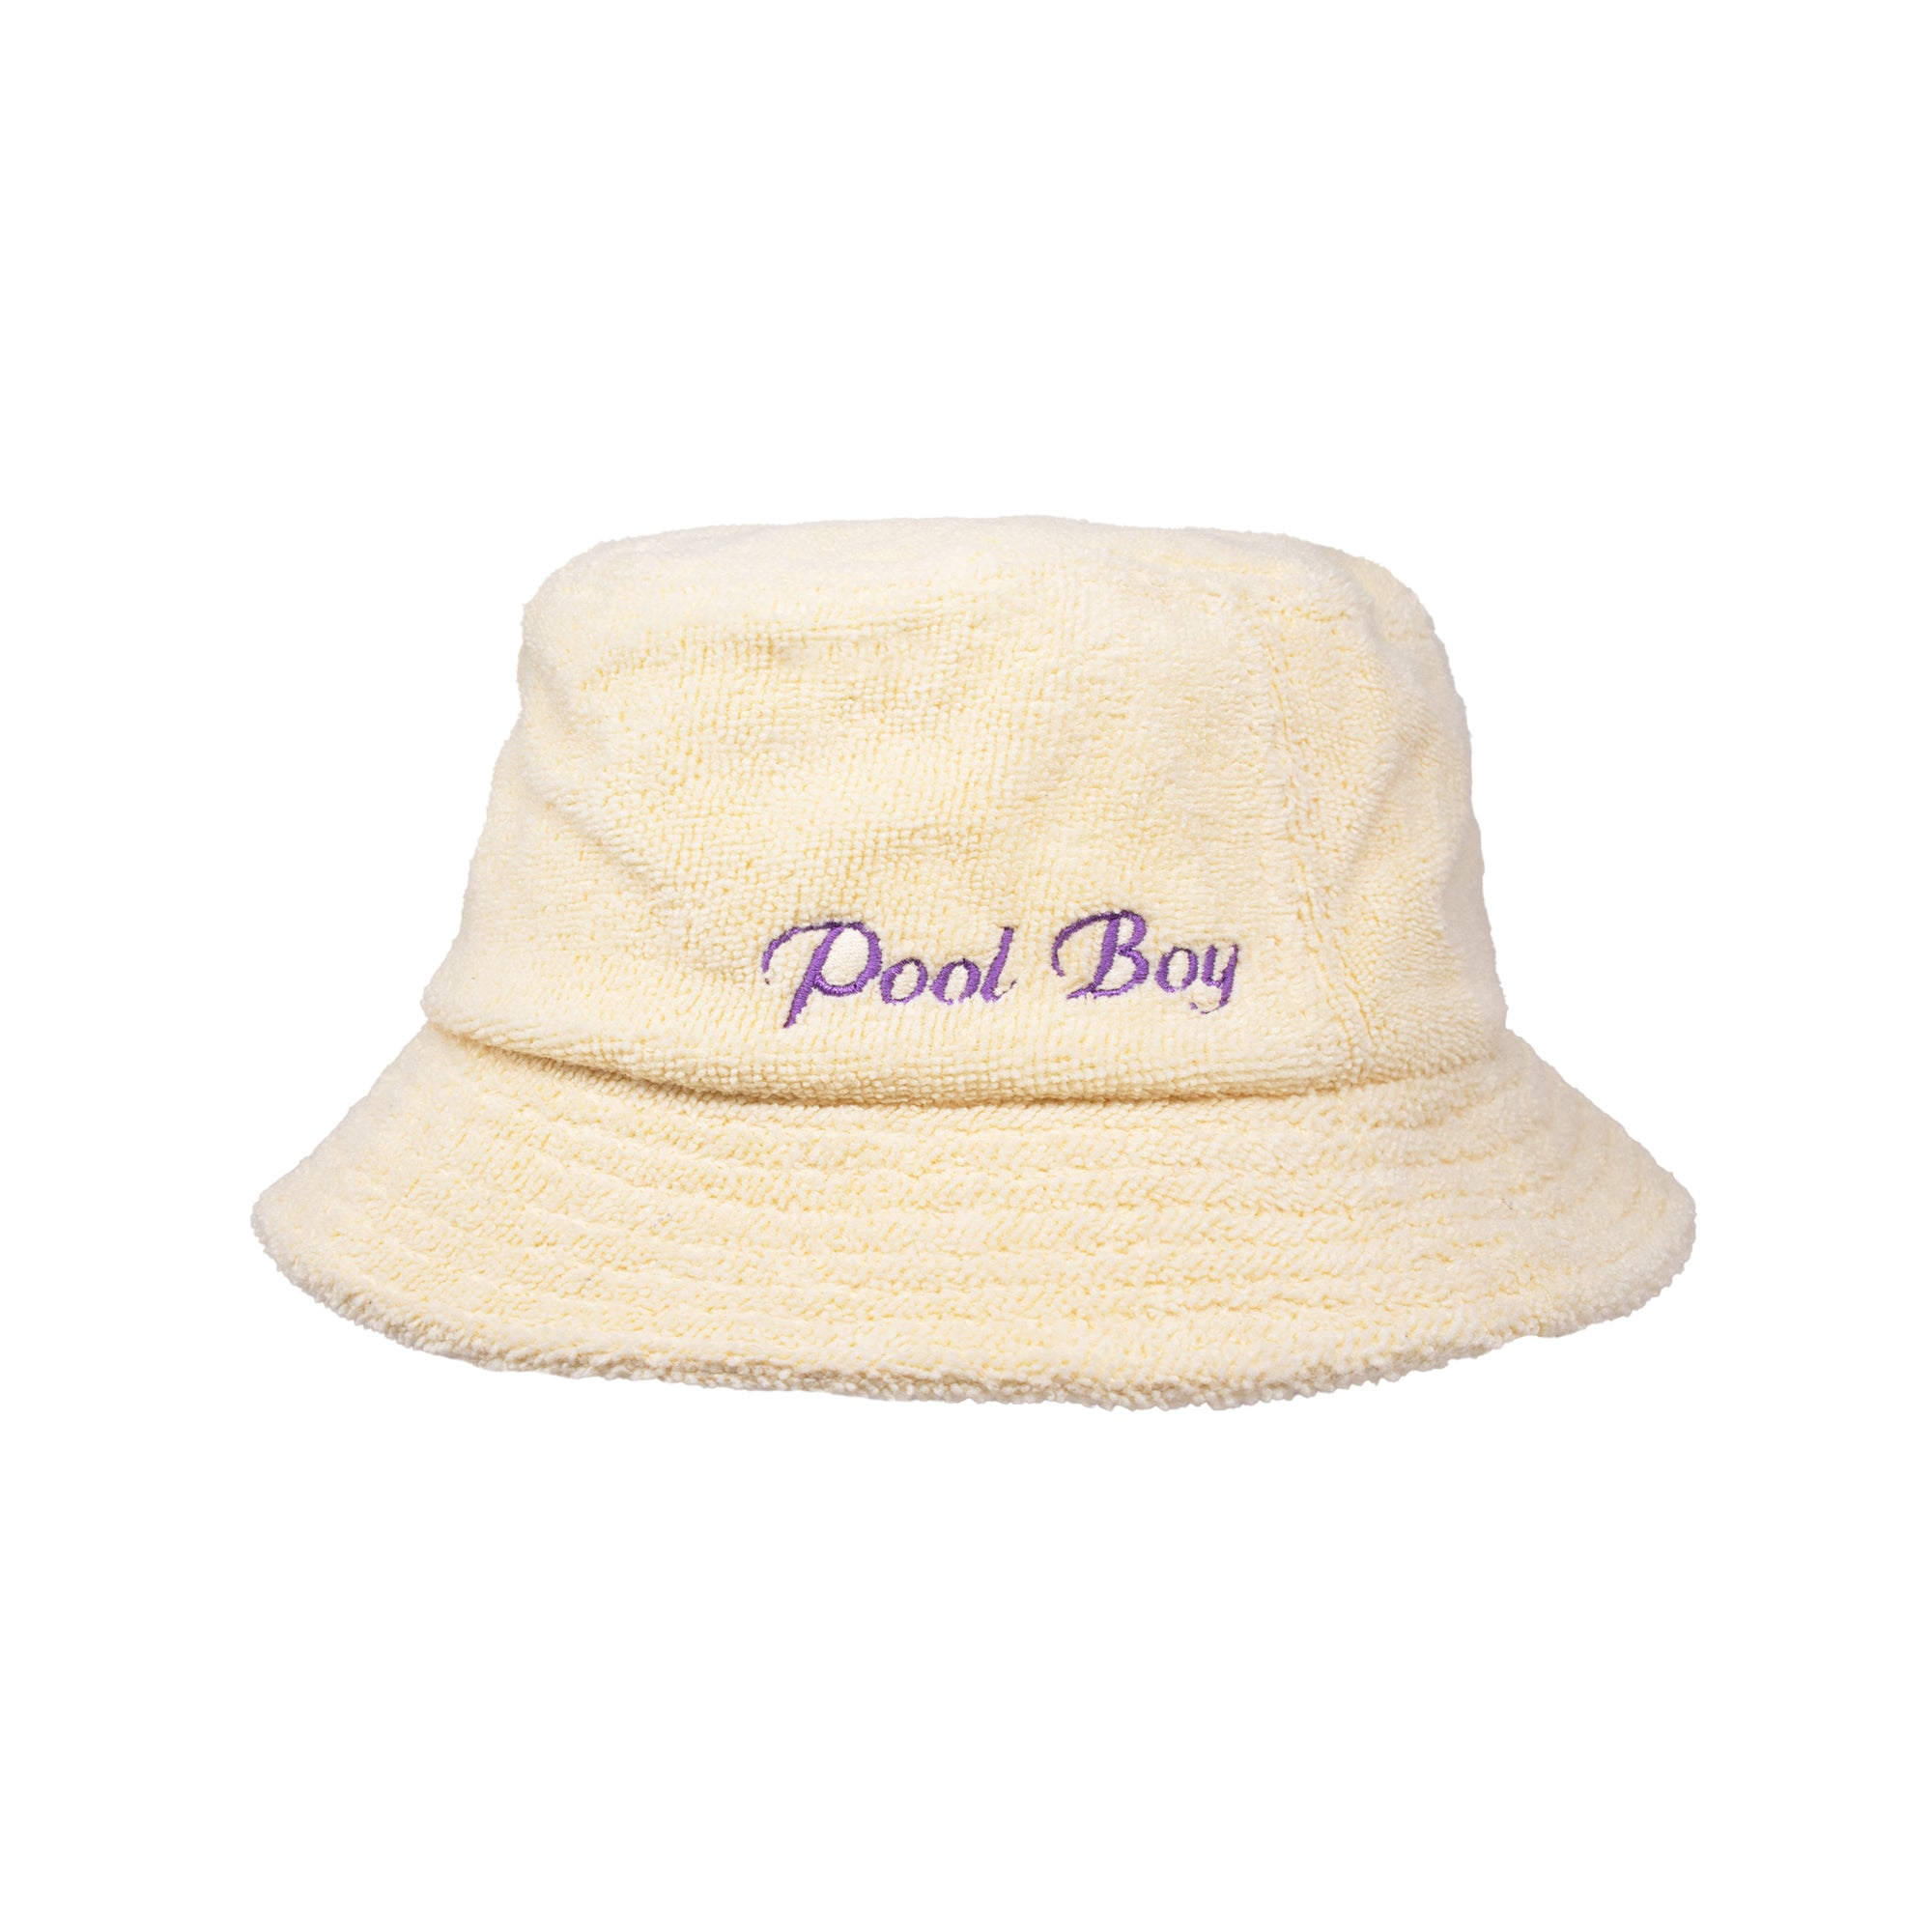 POOL BOY BUCKET HAT